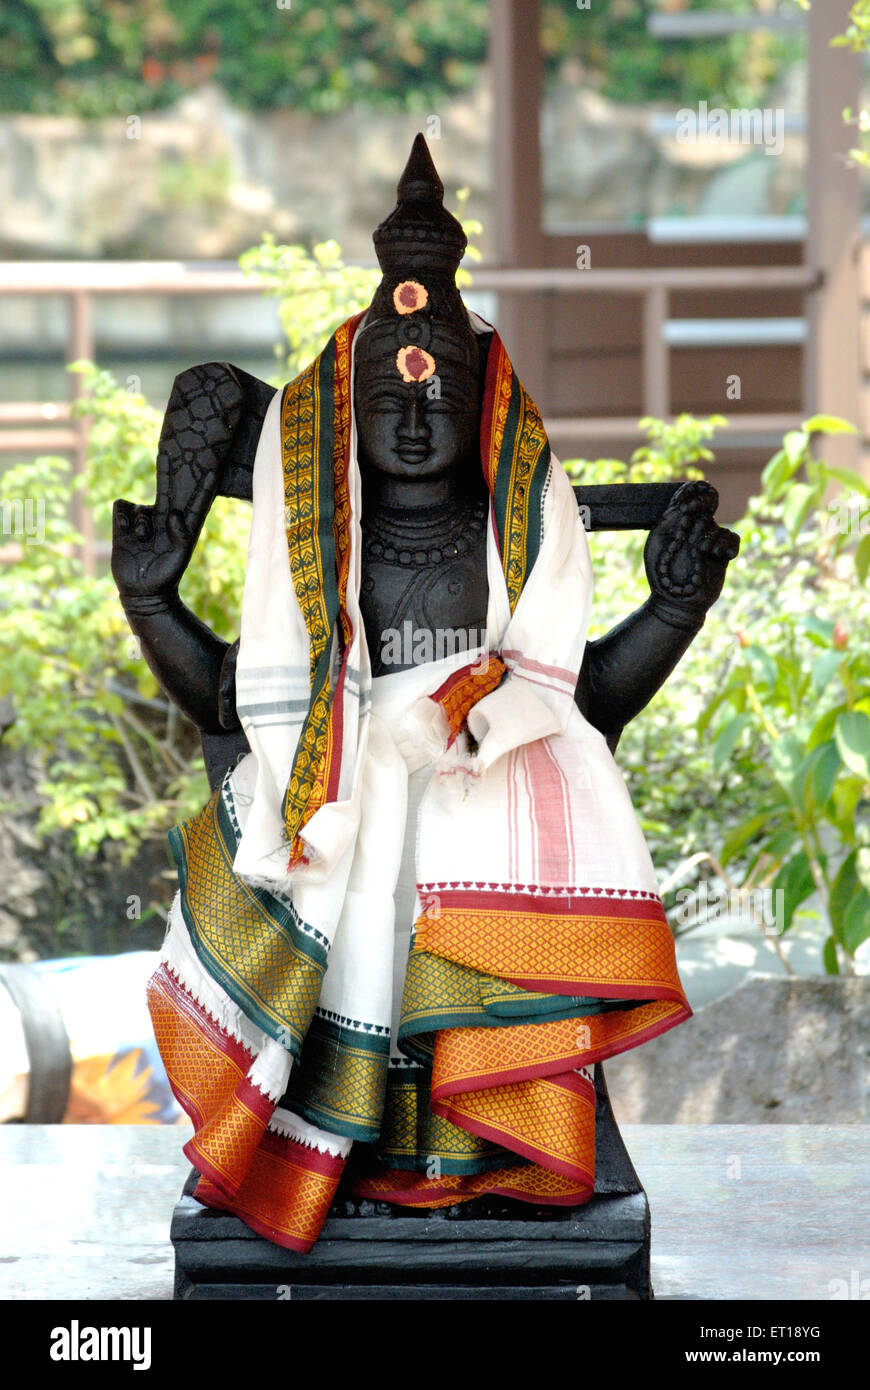 Statue of lord thiruchenthur at batu cave ; Malaysia Stock Photo